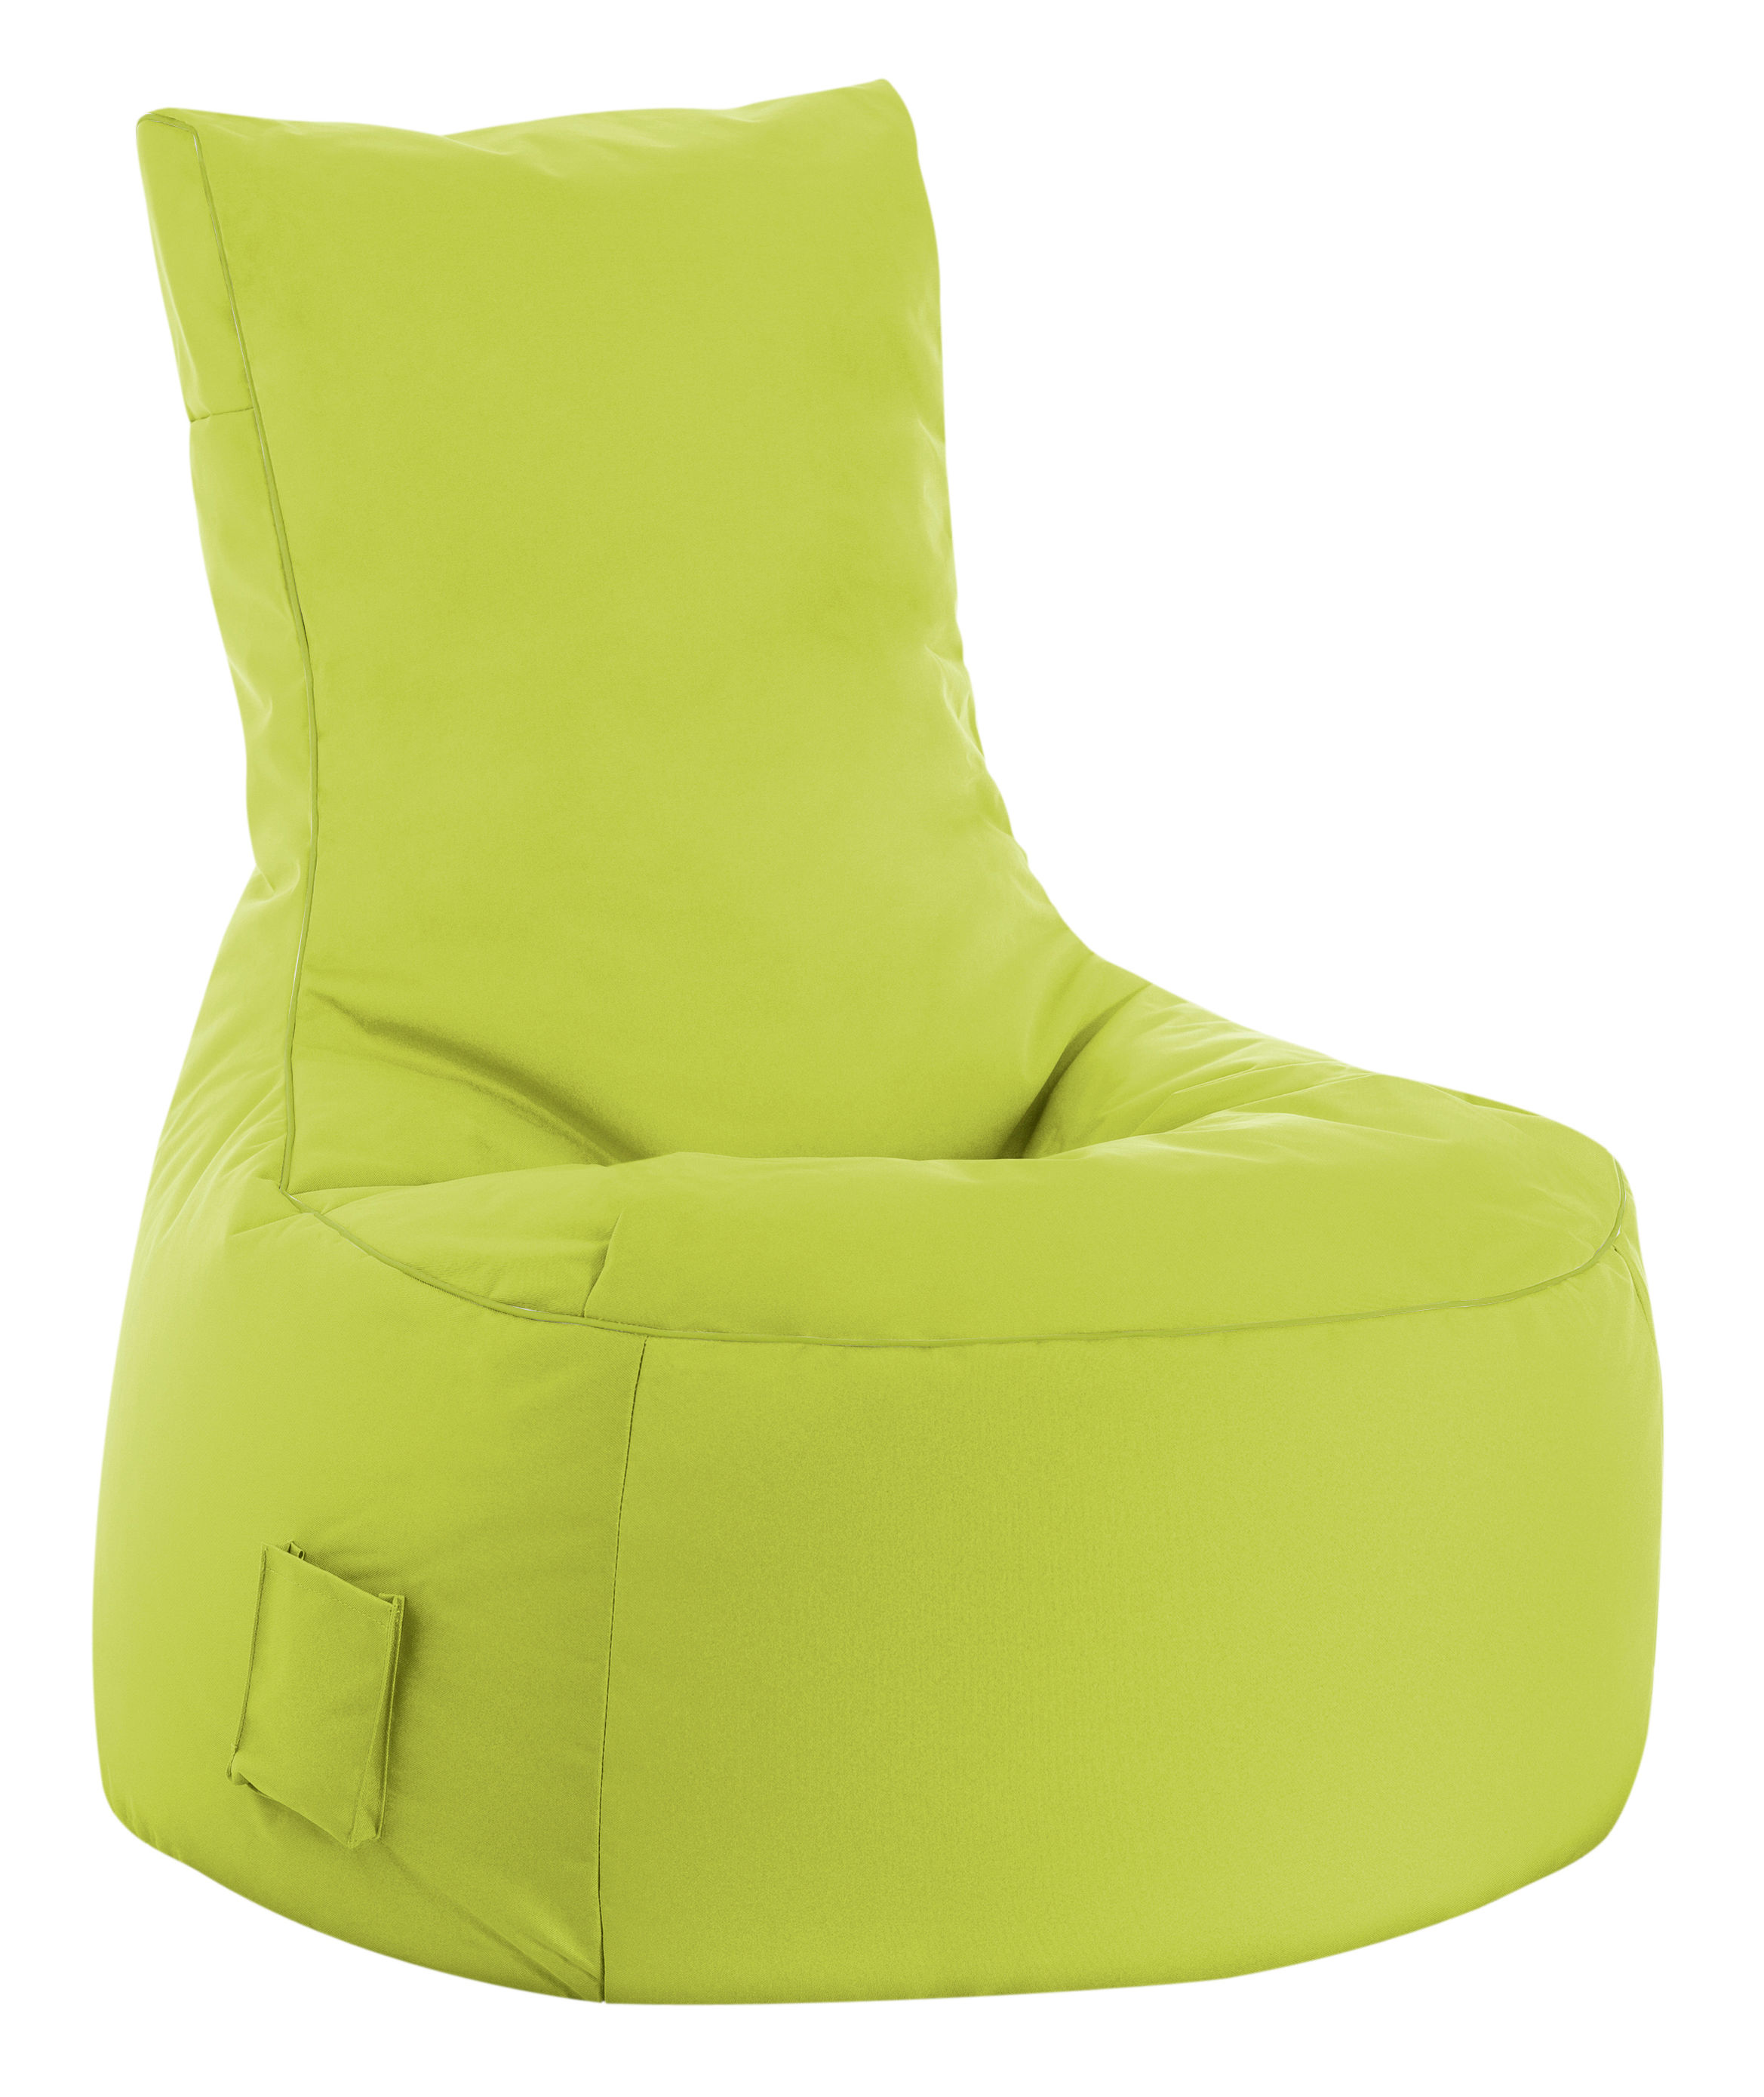 RELAX IT - Sitzsack Swing Farbe: apfelgrün | Weltbild.de